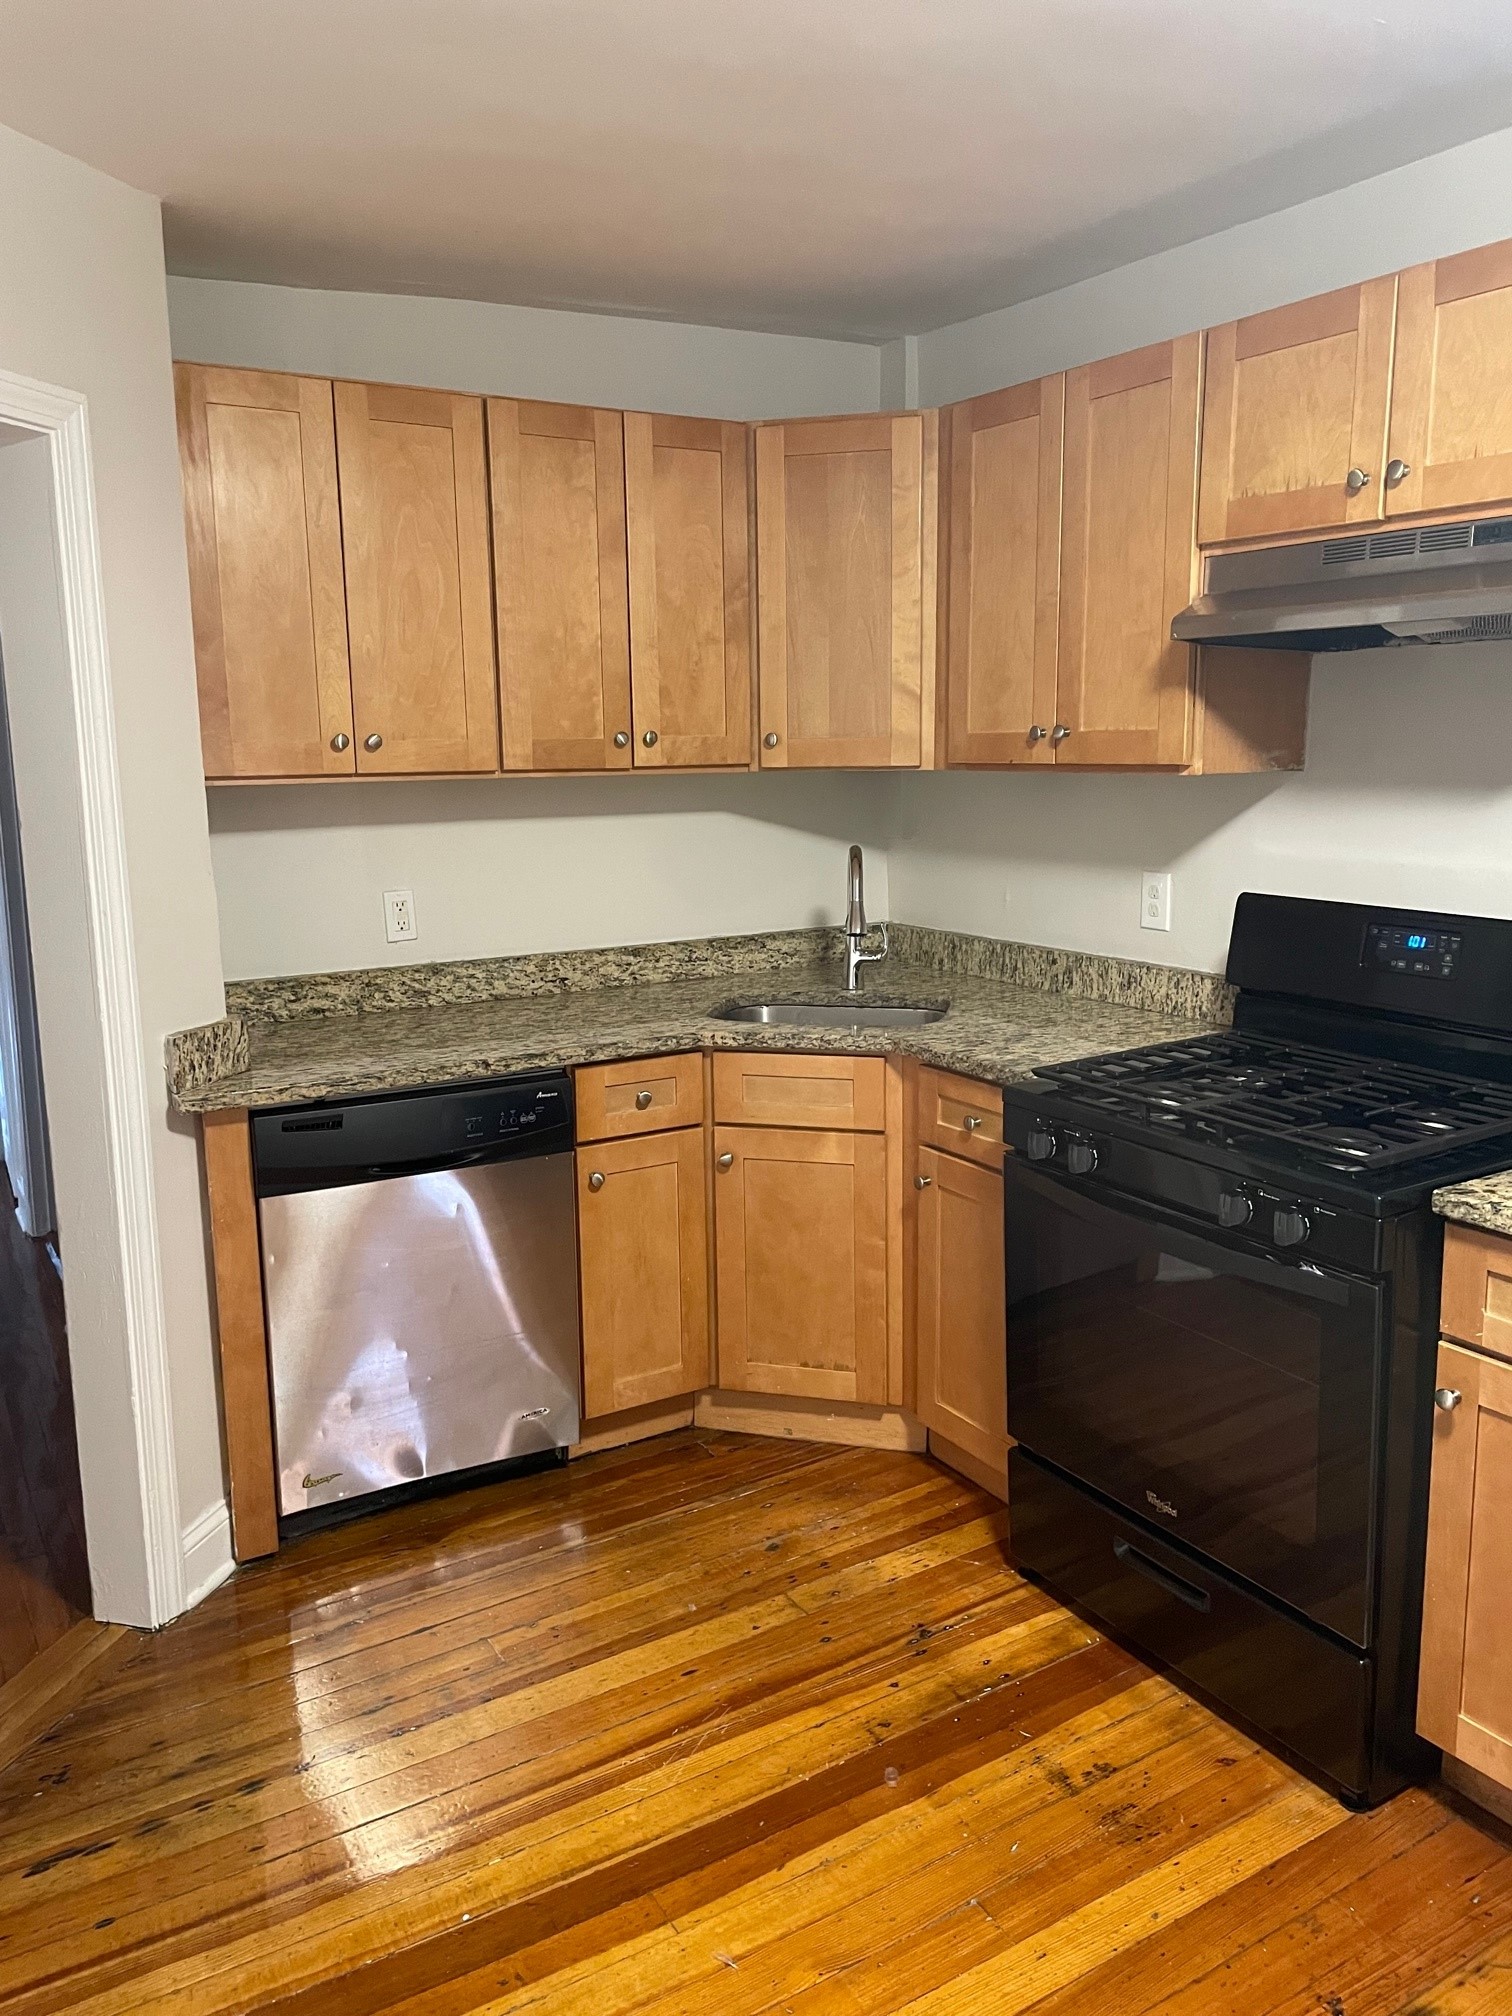 Photos of apartment on Dudley,Boston MA 02119